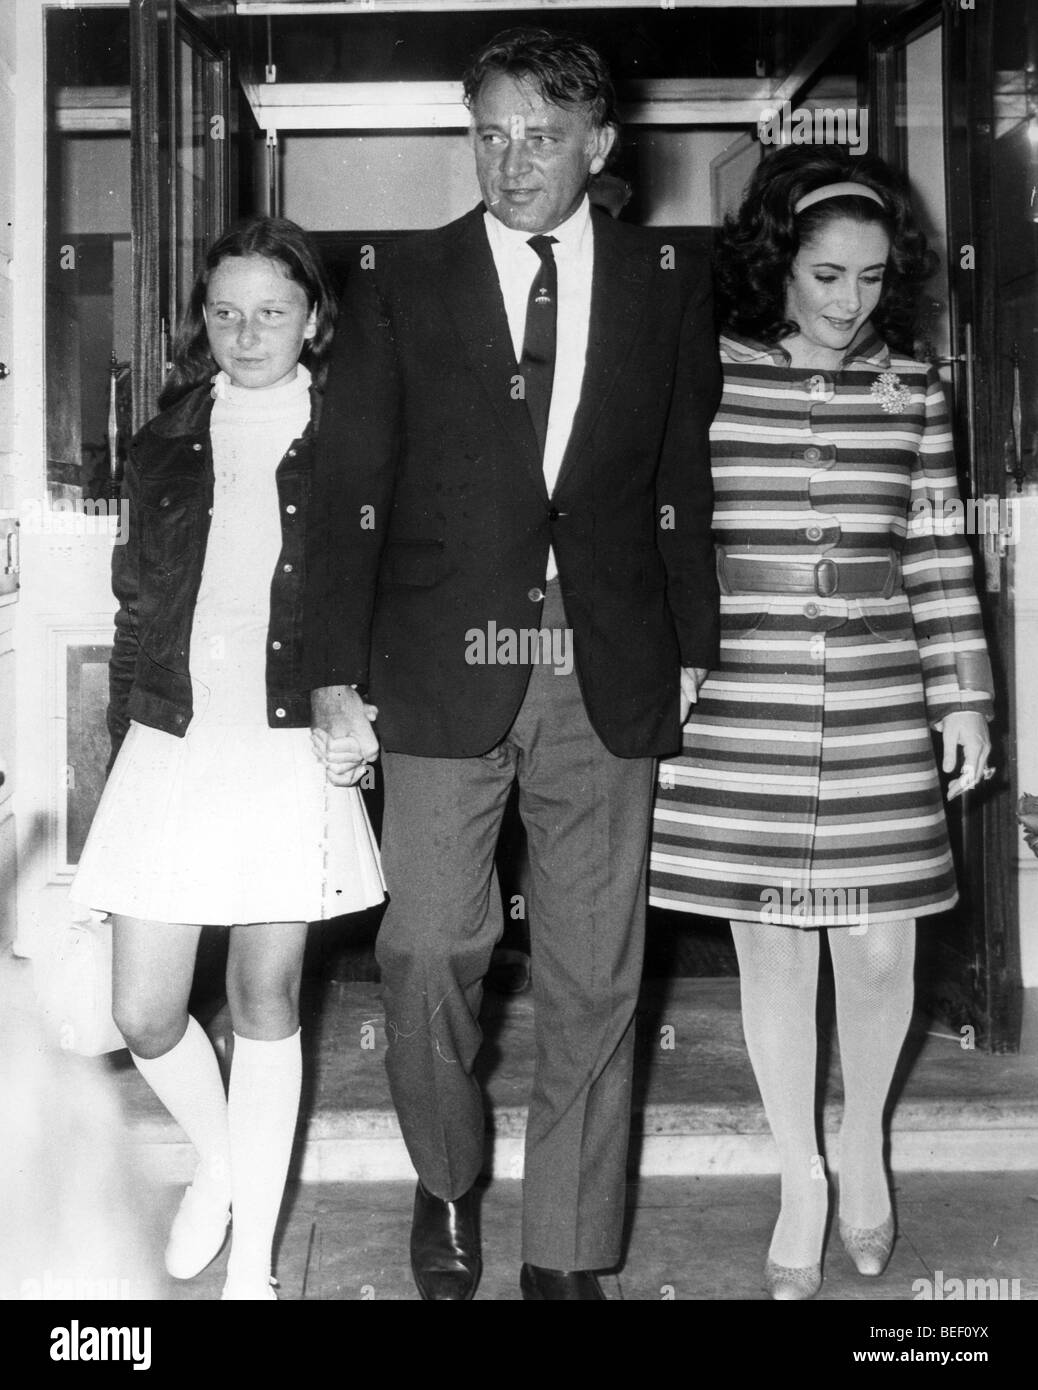 Elizabeth Taylor And Husband Richard Burton Fotos e Imágenes de stock -  Alamy